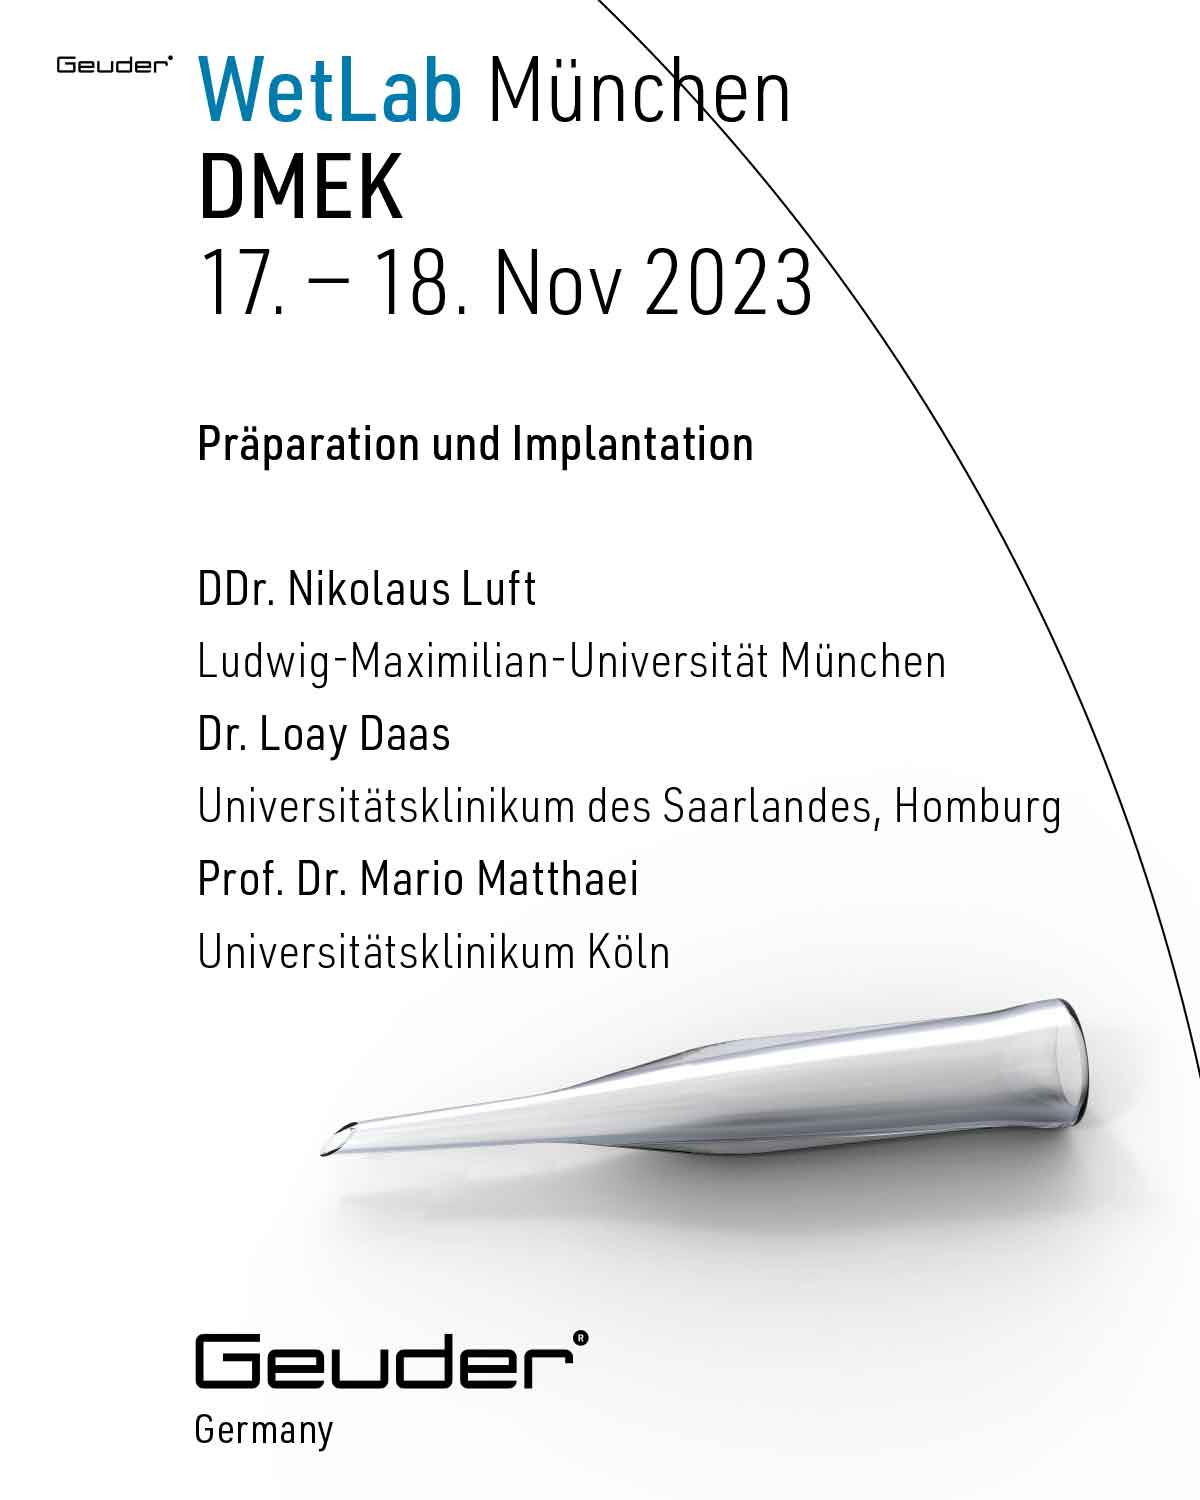 
                            WetLab München DMEK November 2023